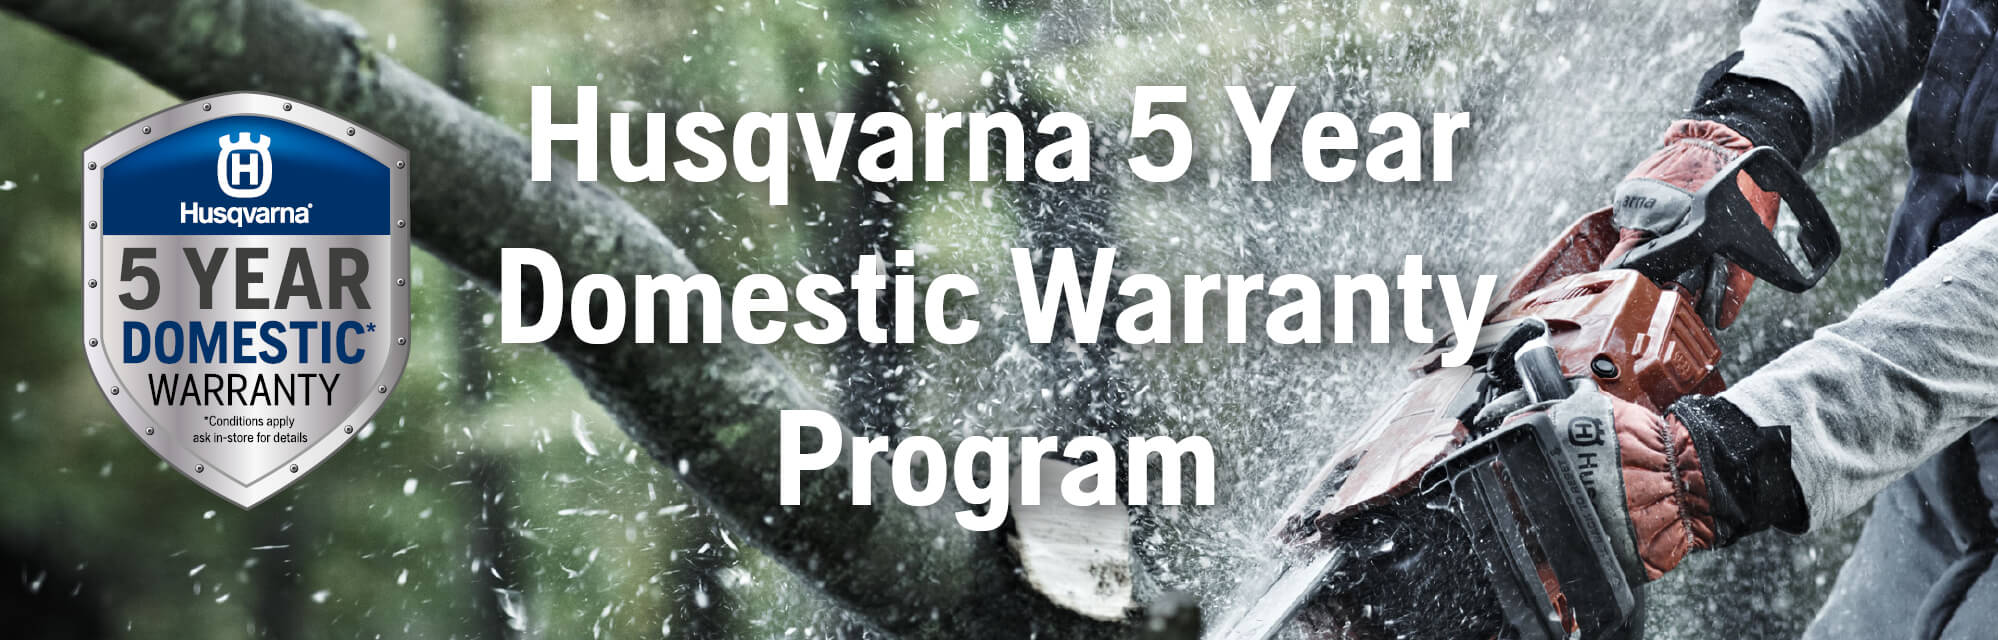 Husqvarna 5 Year Domestic Warranty Program - Toowoomba Outdoor Power Products in Glenvale, QLD